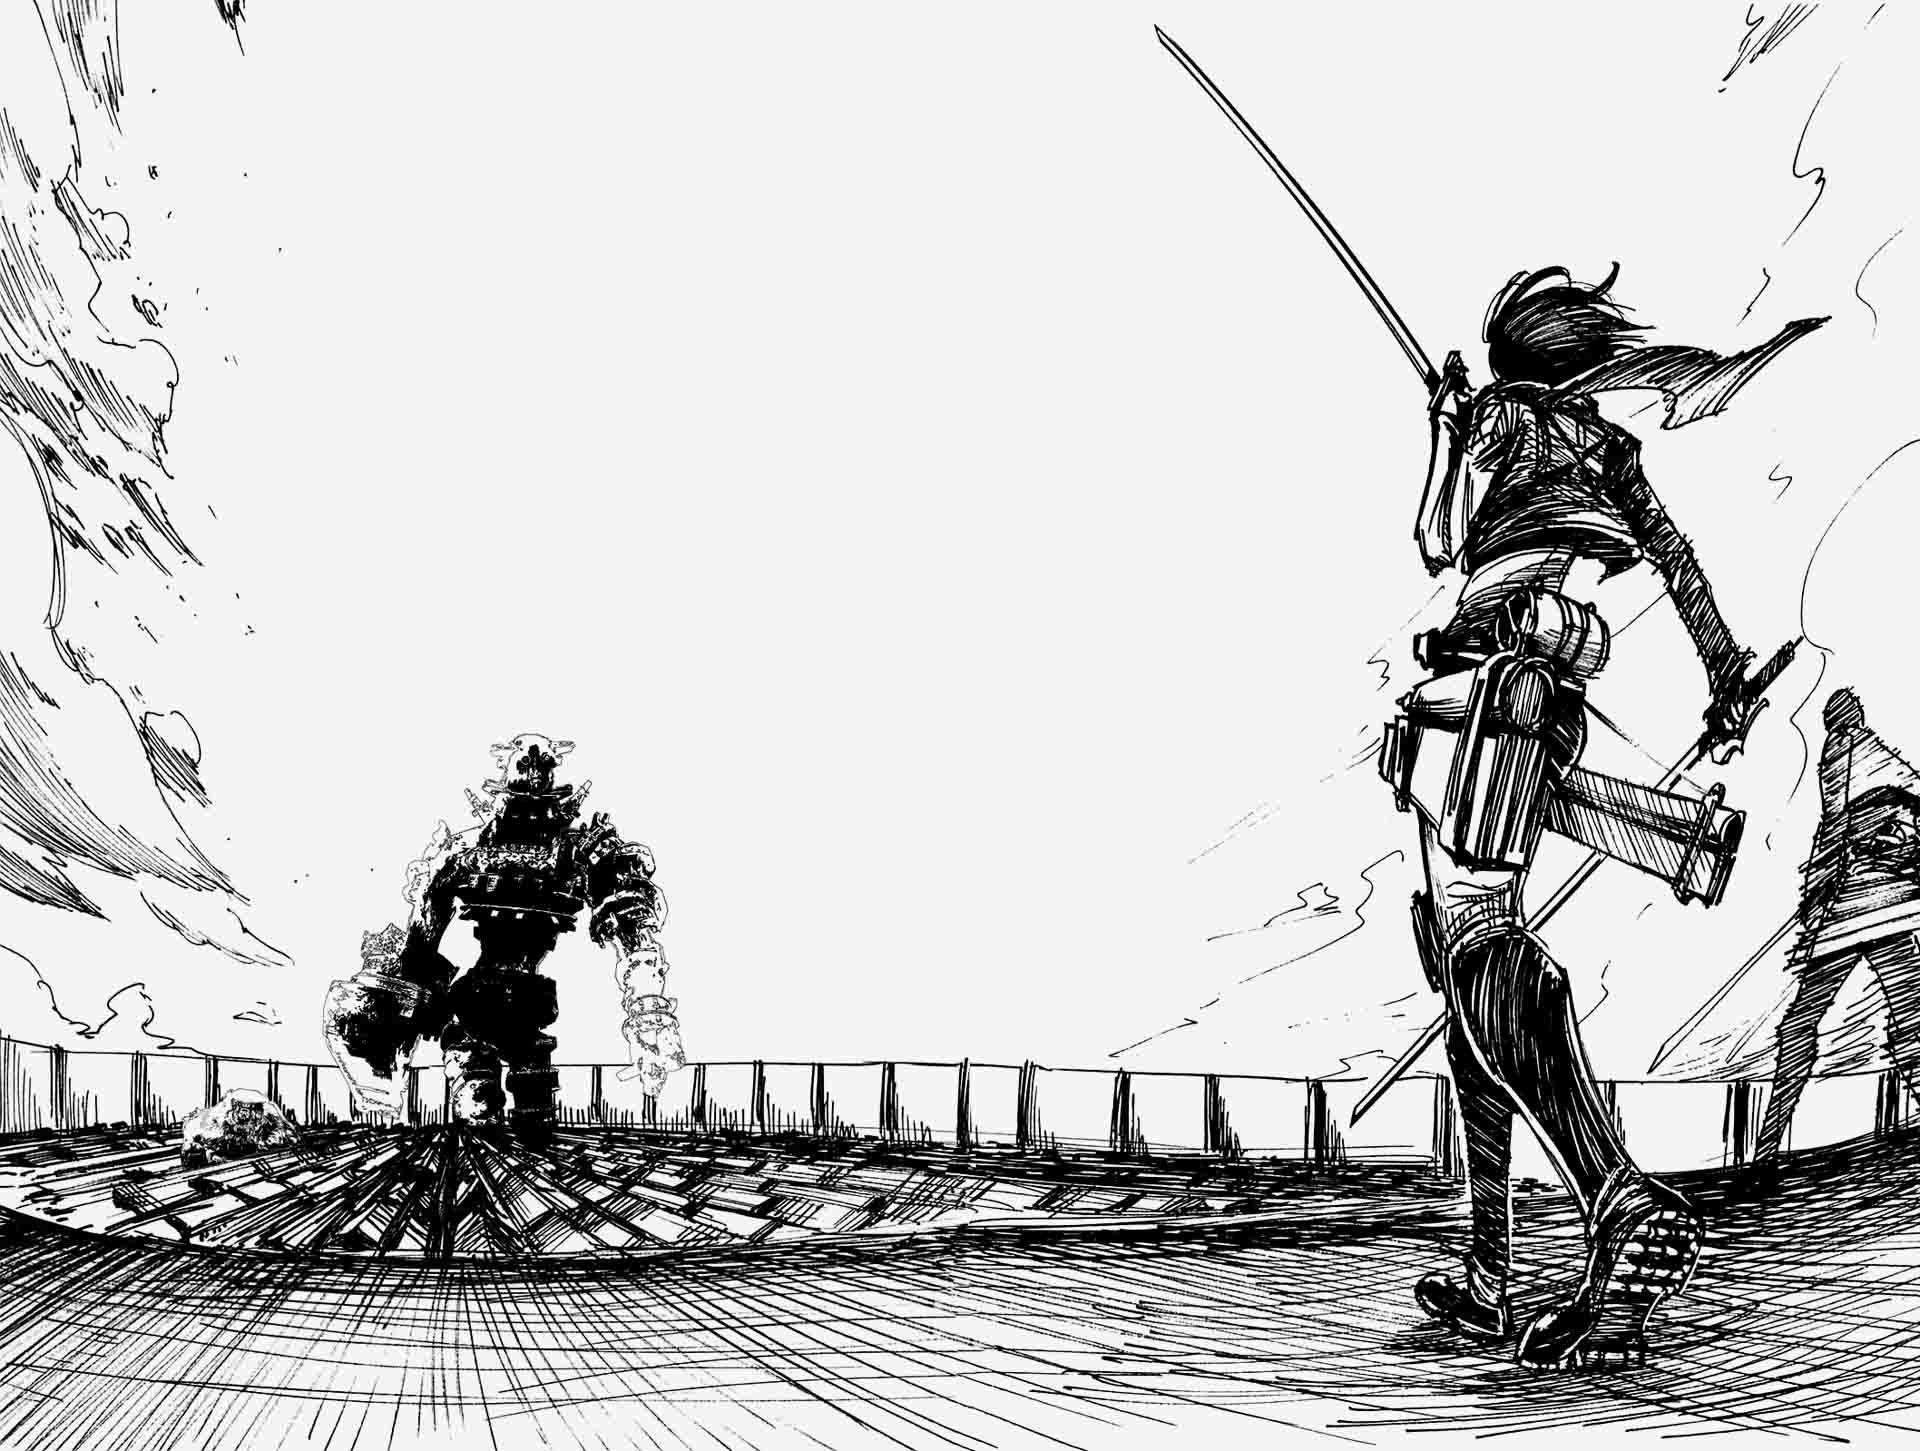 Attack On Titan Manga Wallpaper Online Sale, Save 50 jlcatj.gob.mx